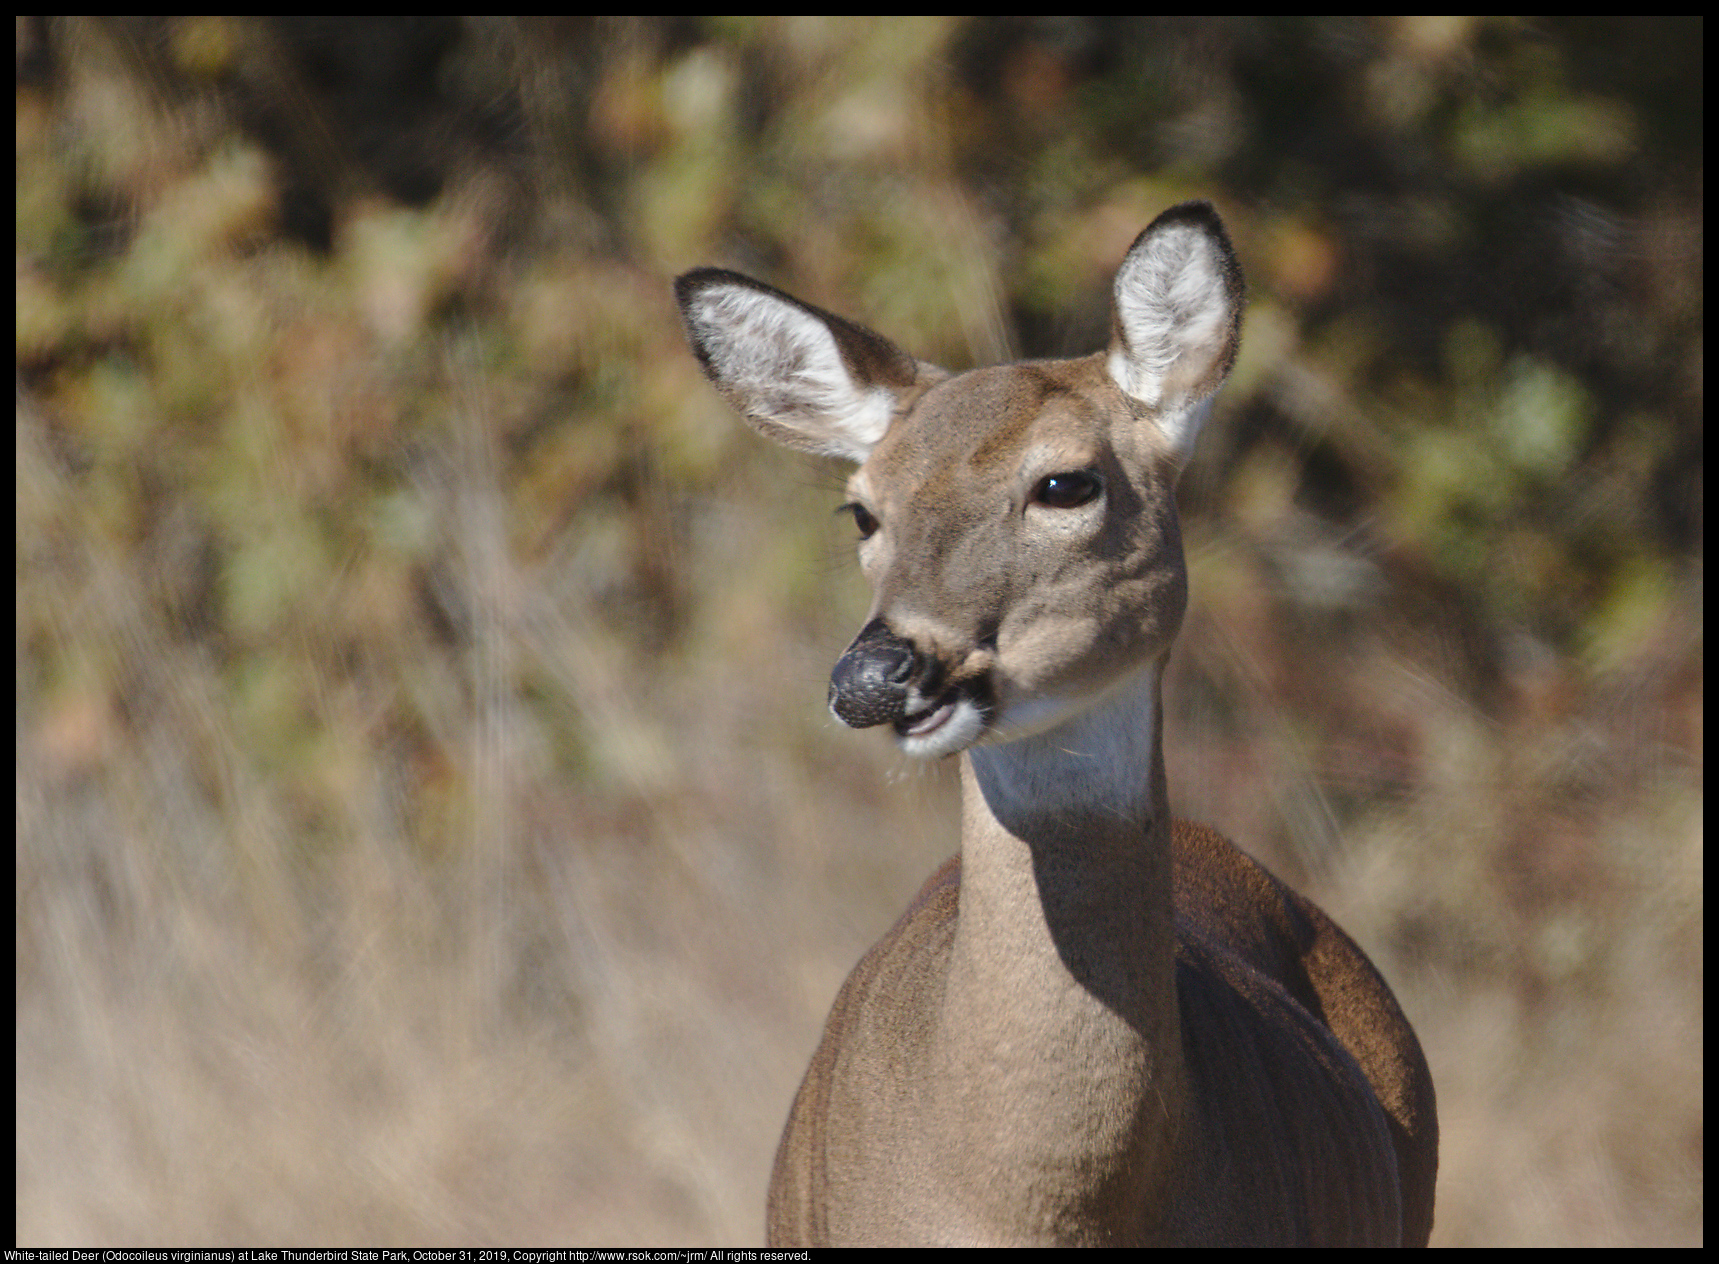 White-tailed Deer (Odocoileus virginianus) at Lake Thunderbird State Park, October 31, 2019